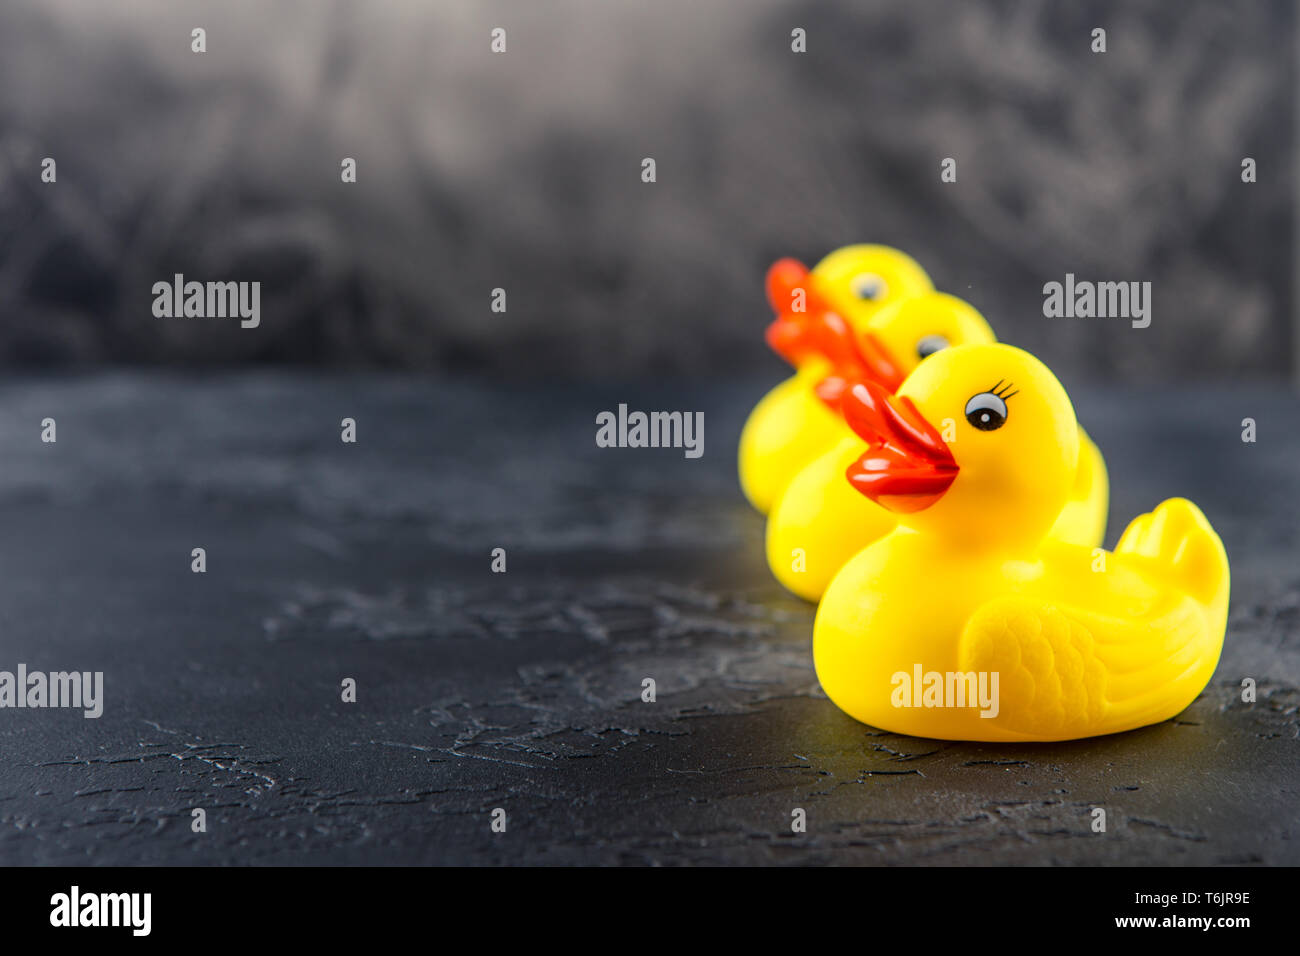 YEllow rubber ducks Stock Photo